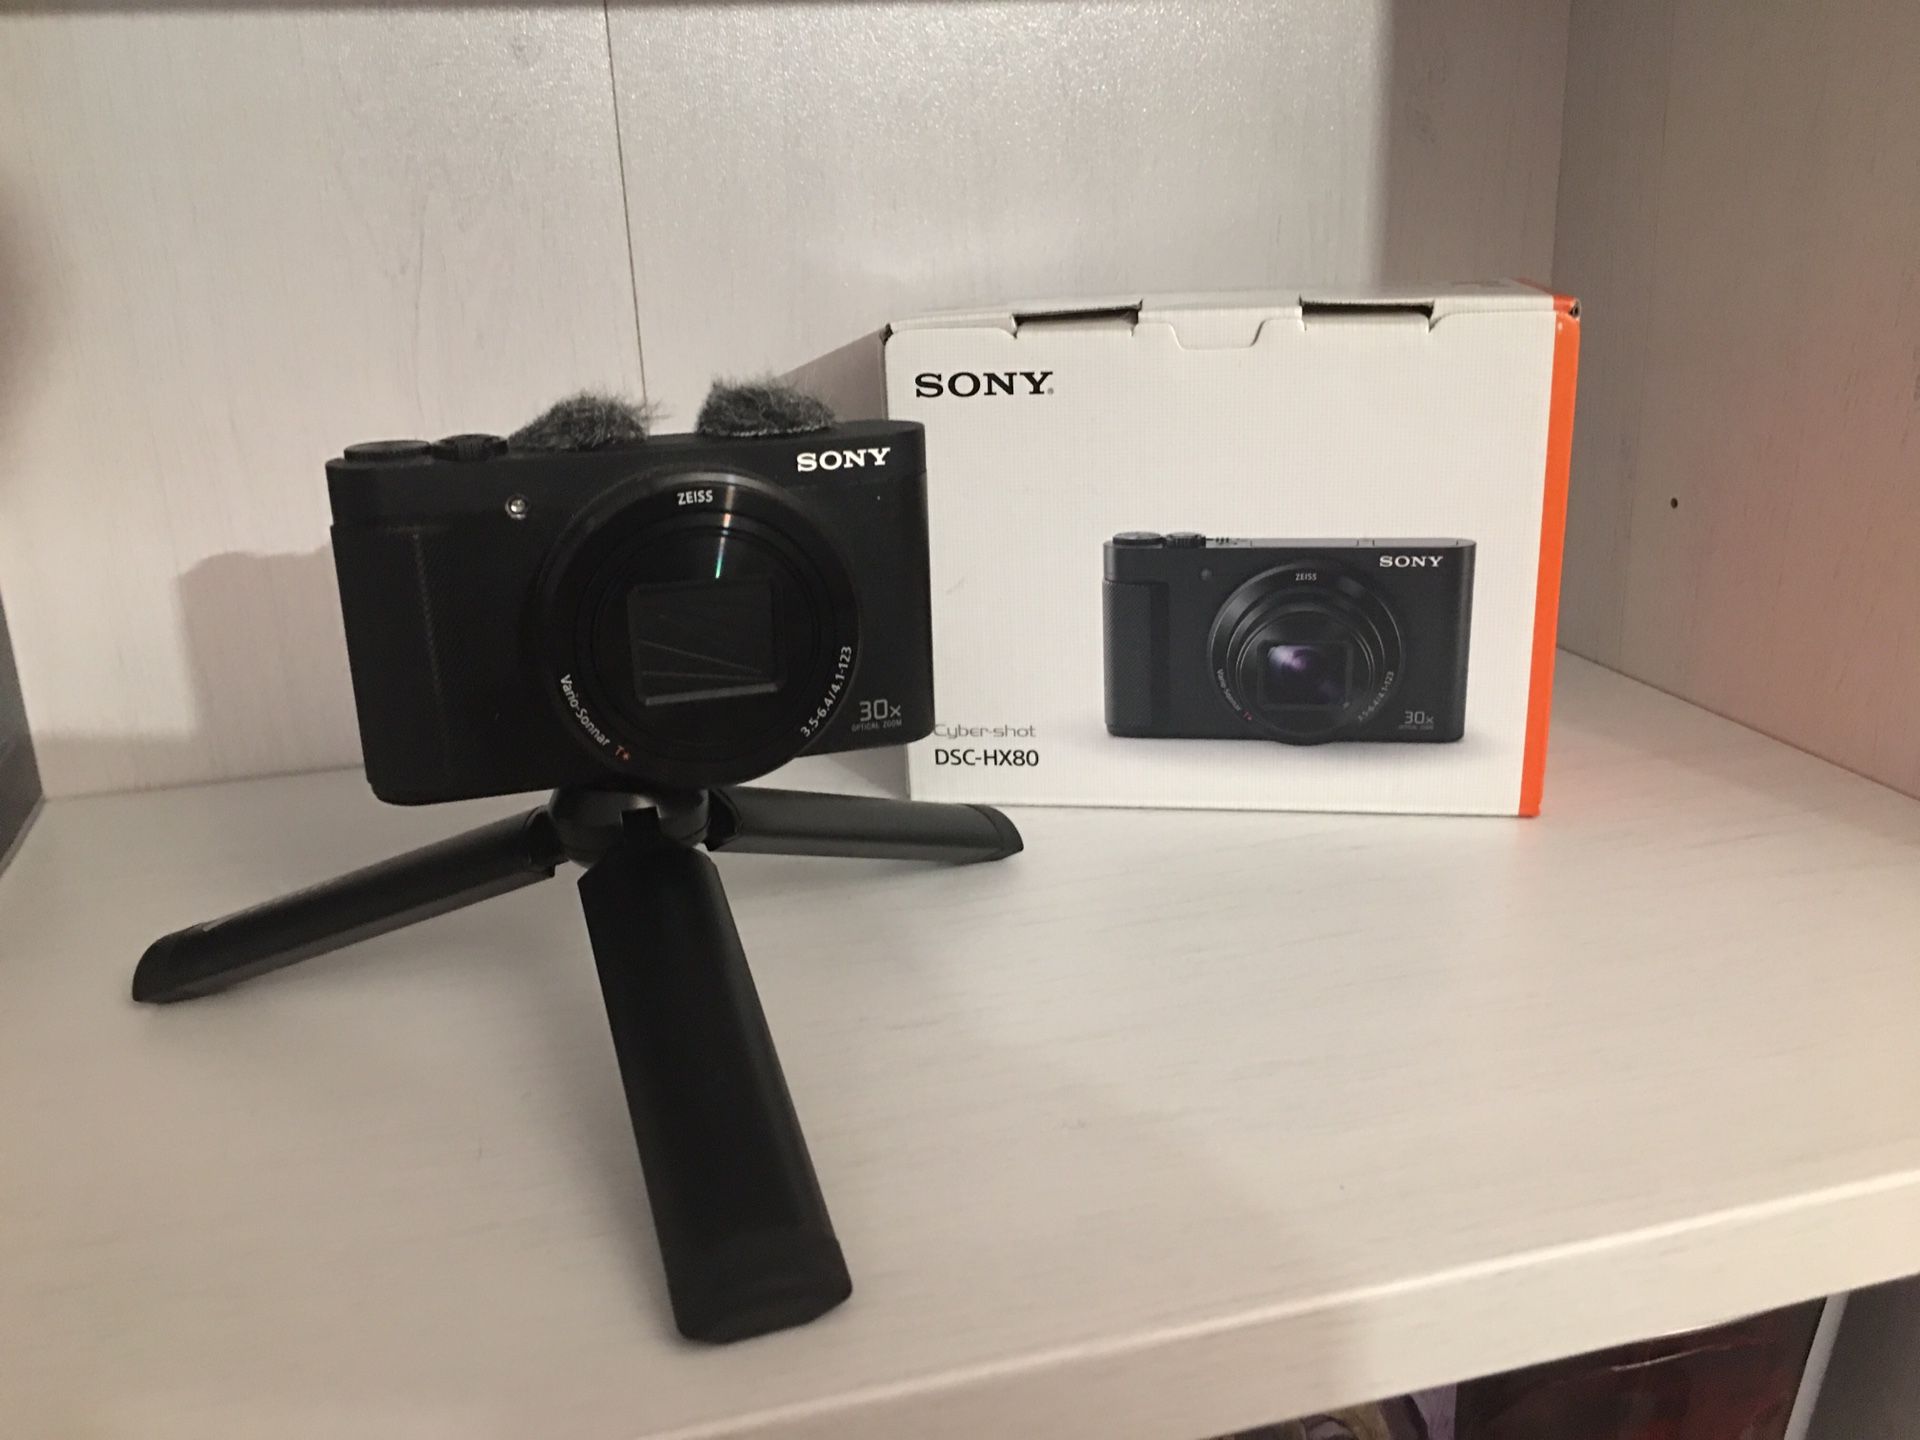 Sony camera DSC-HX80 (tripod not included)